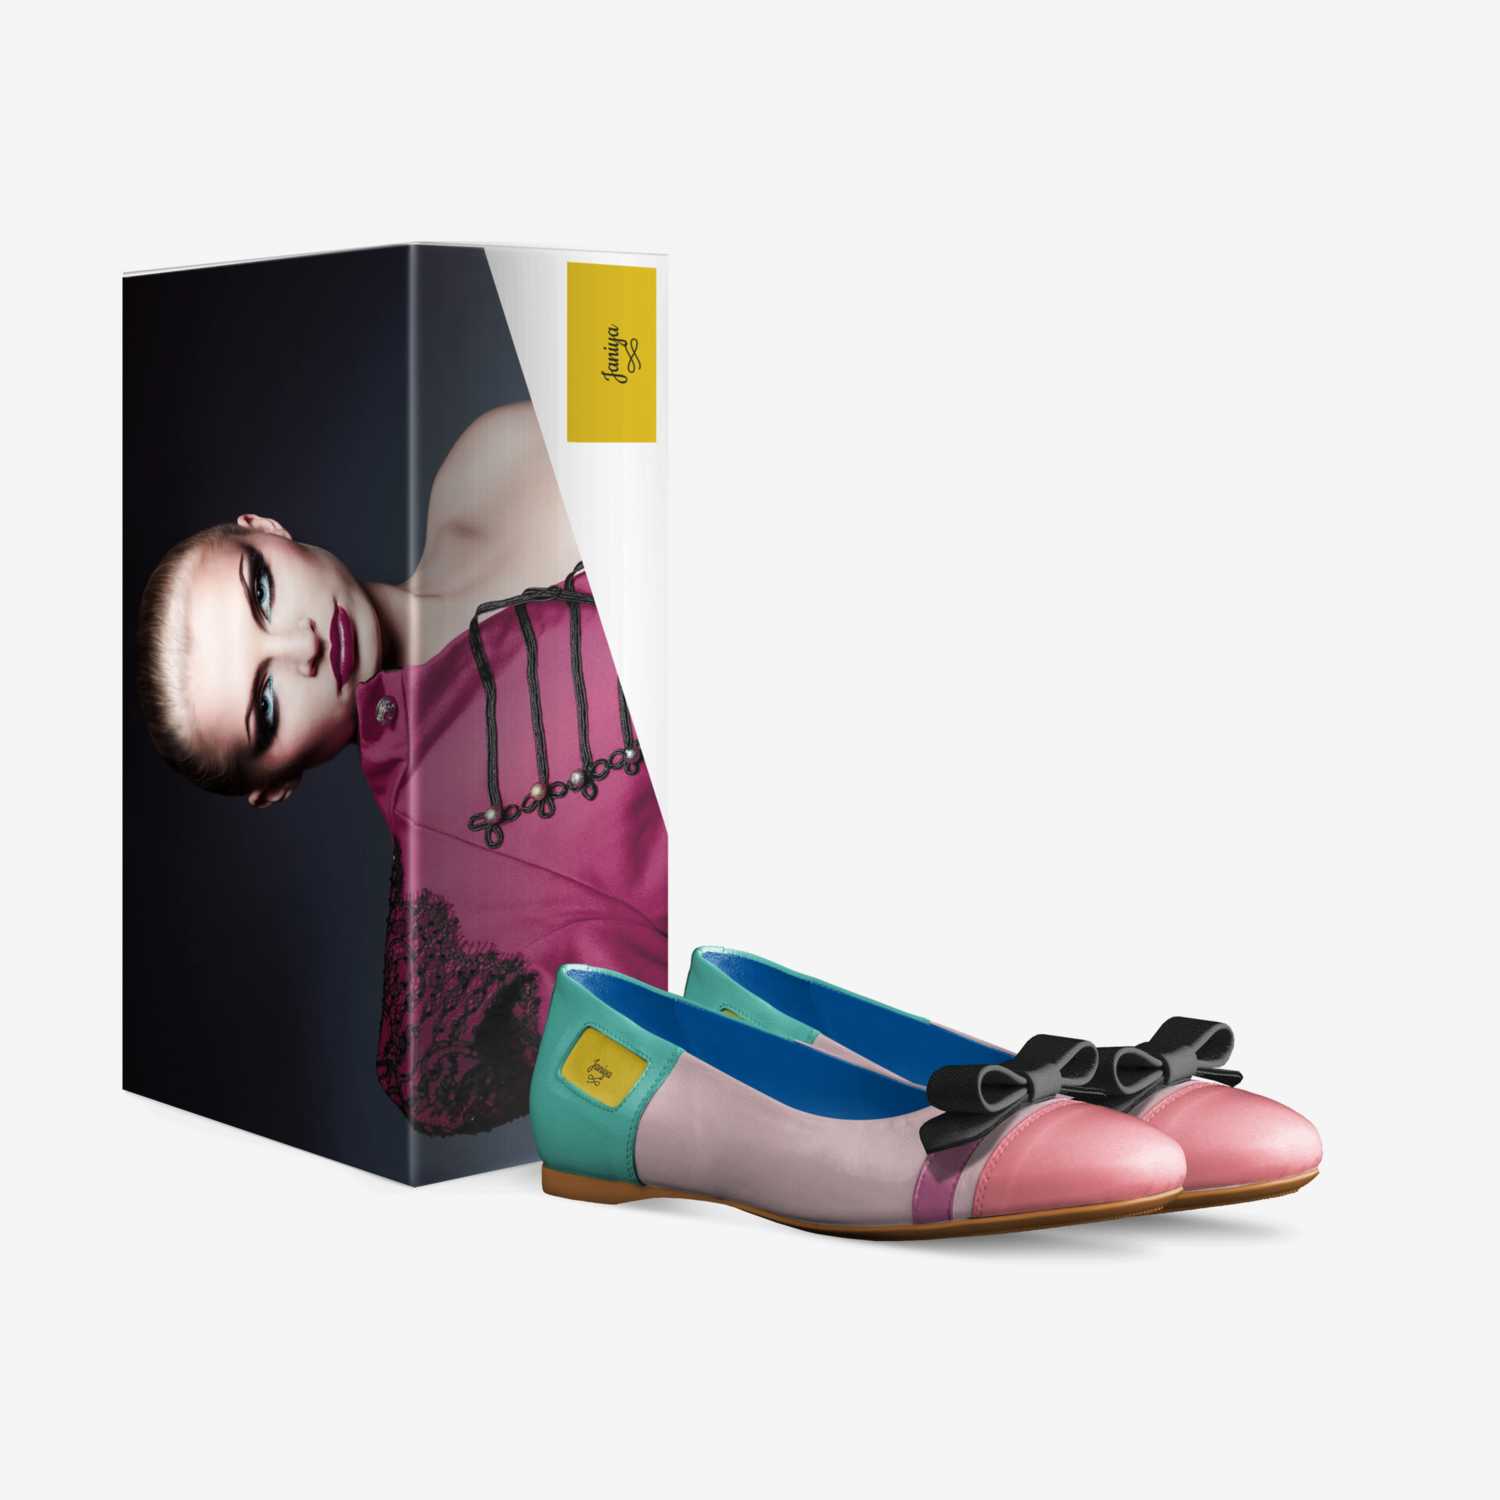 Janiya custom made in Italy shoes by J Jones | Box view